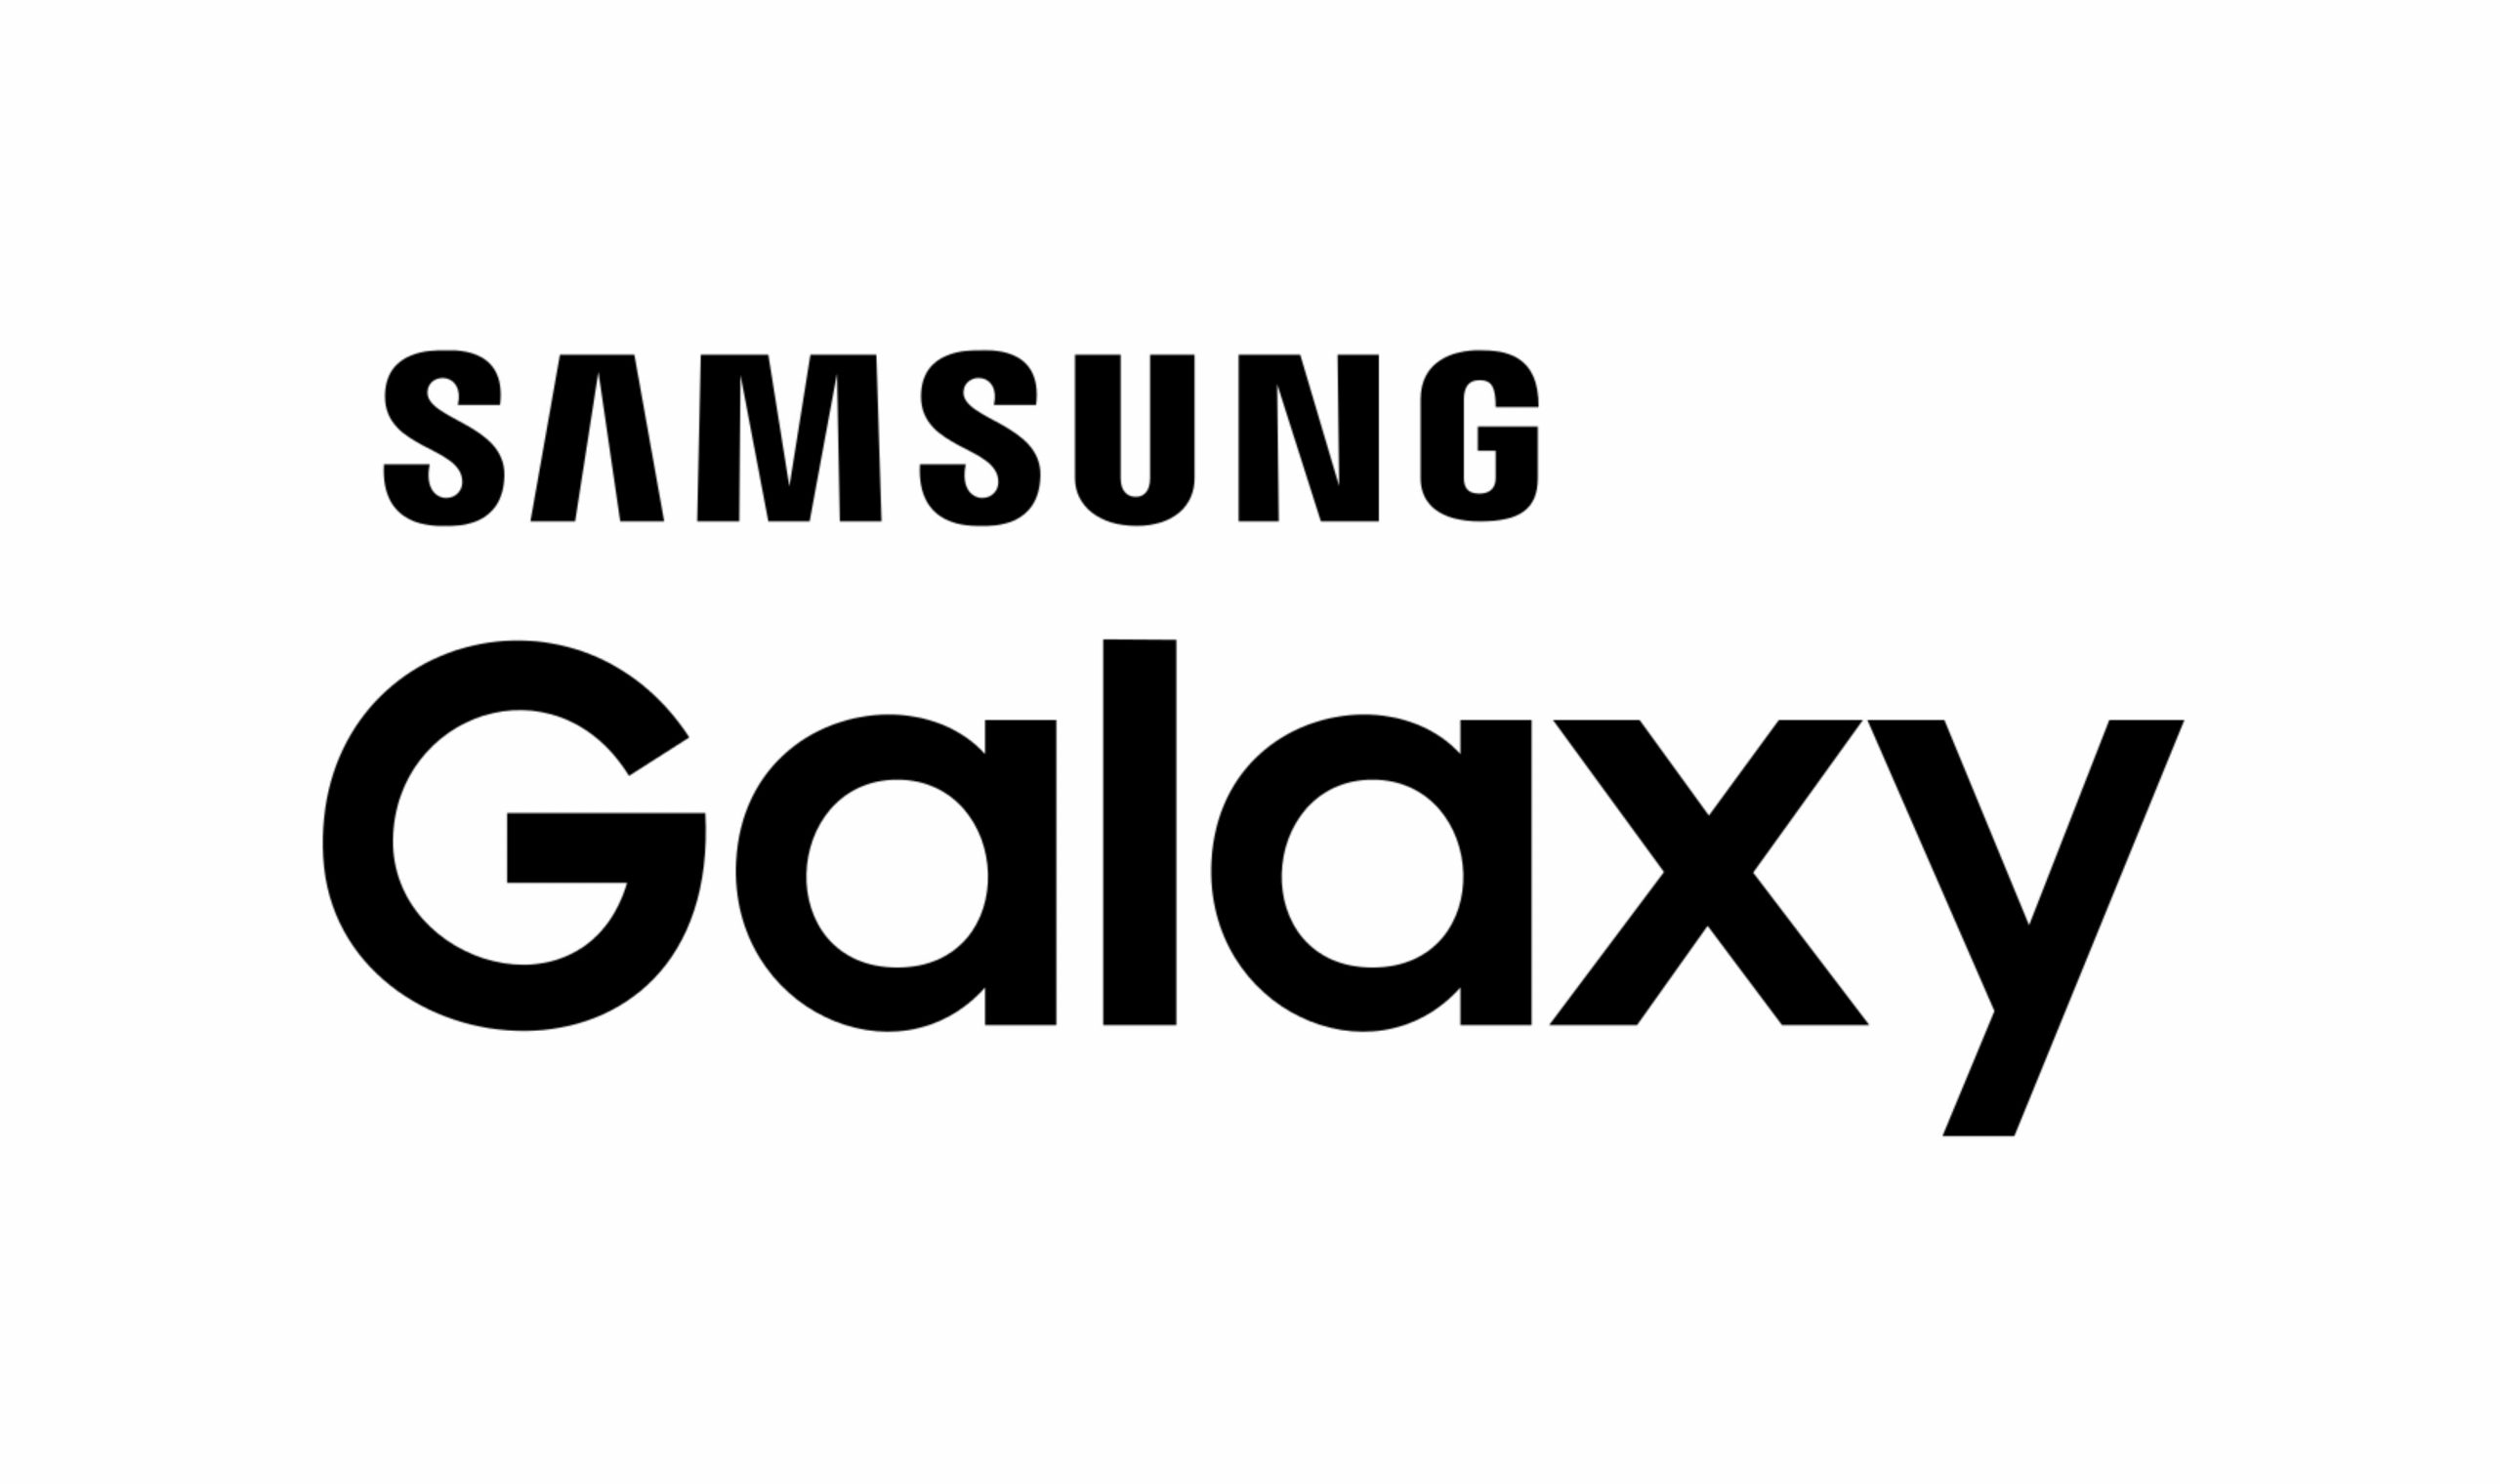 Galaxy Note20 FE branding appears on Samsung’s website